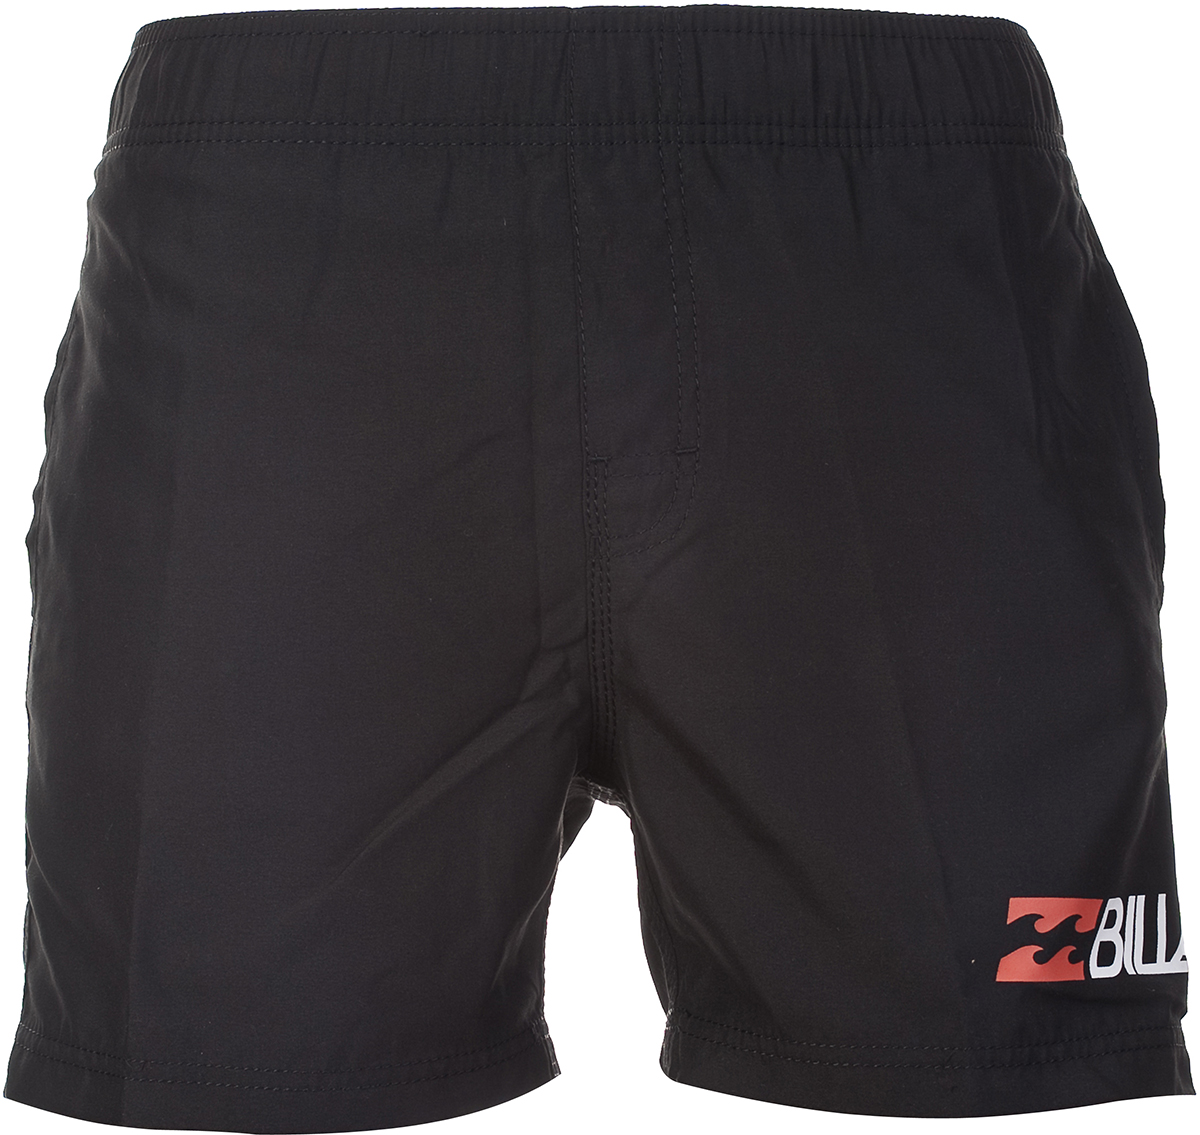 ICON BOARDSSHORT - Men's shorts